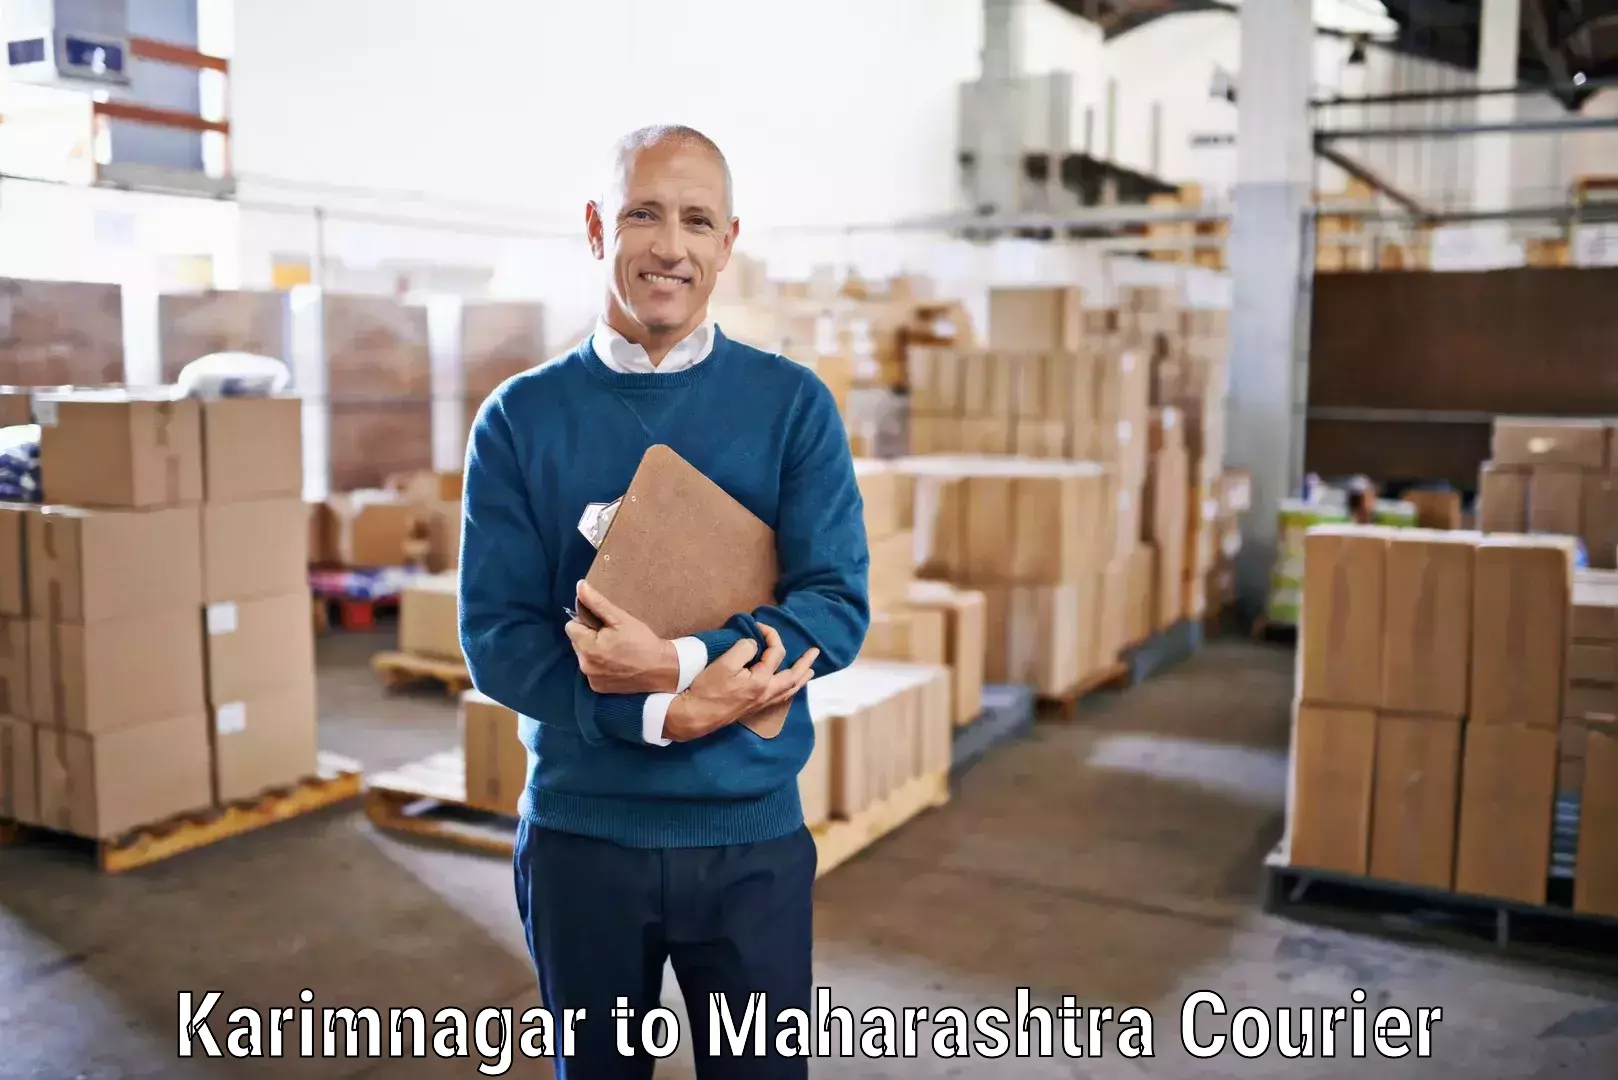 Courier service innovation Karimnagar to Nagothane